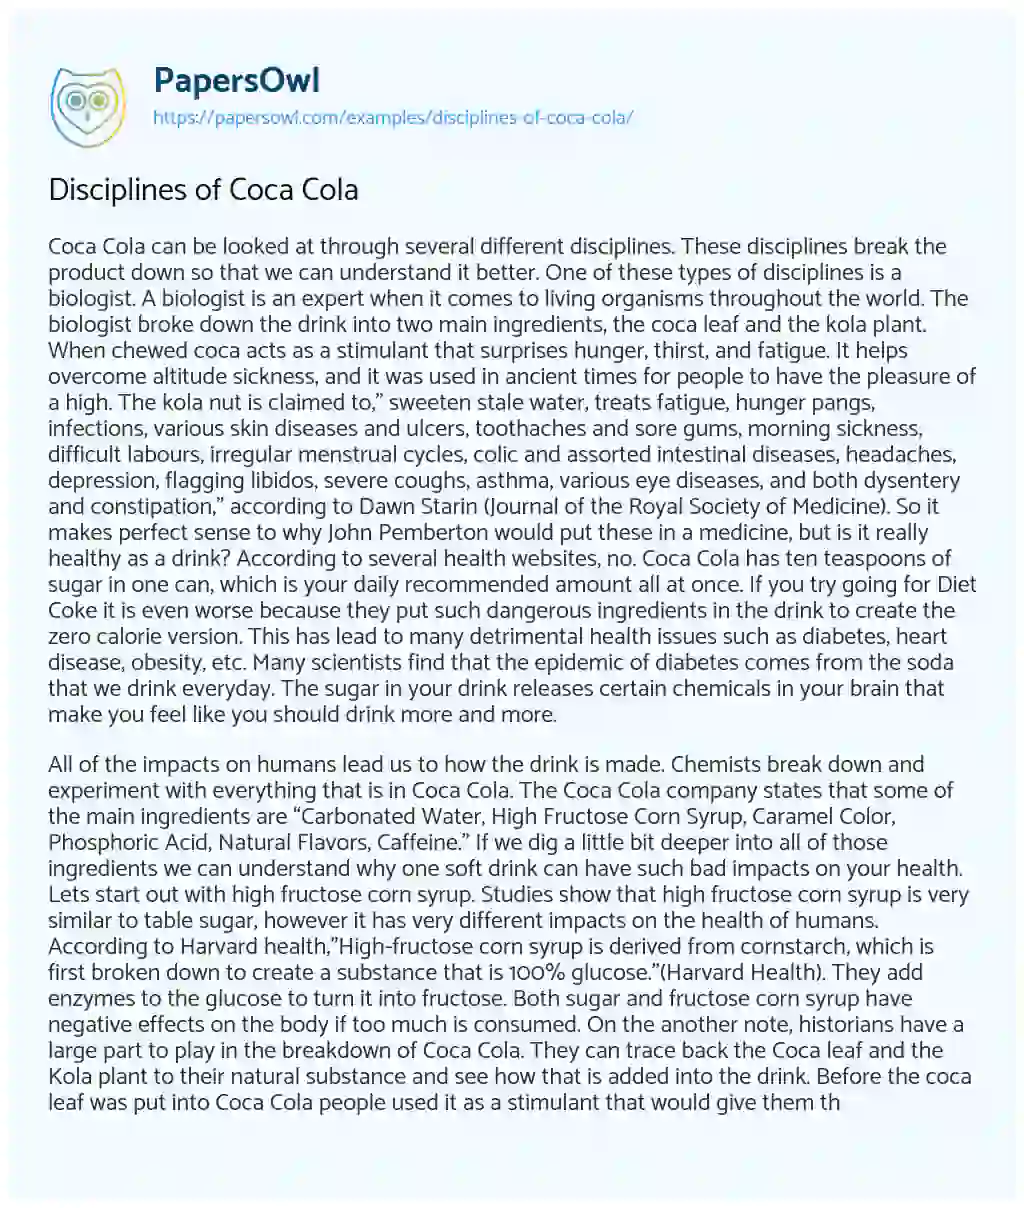 Essay on Disciplines of Coca Cola